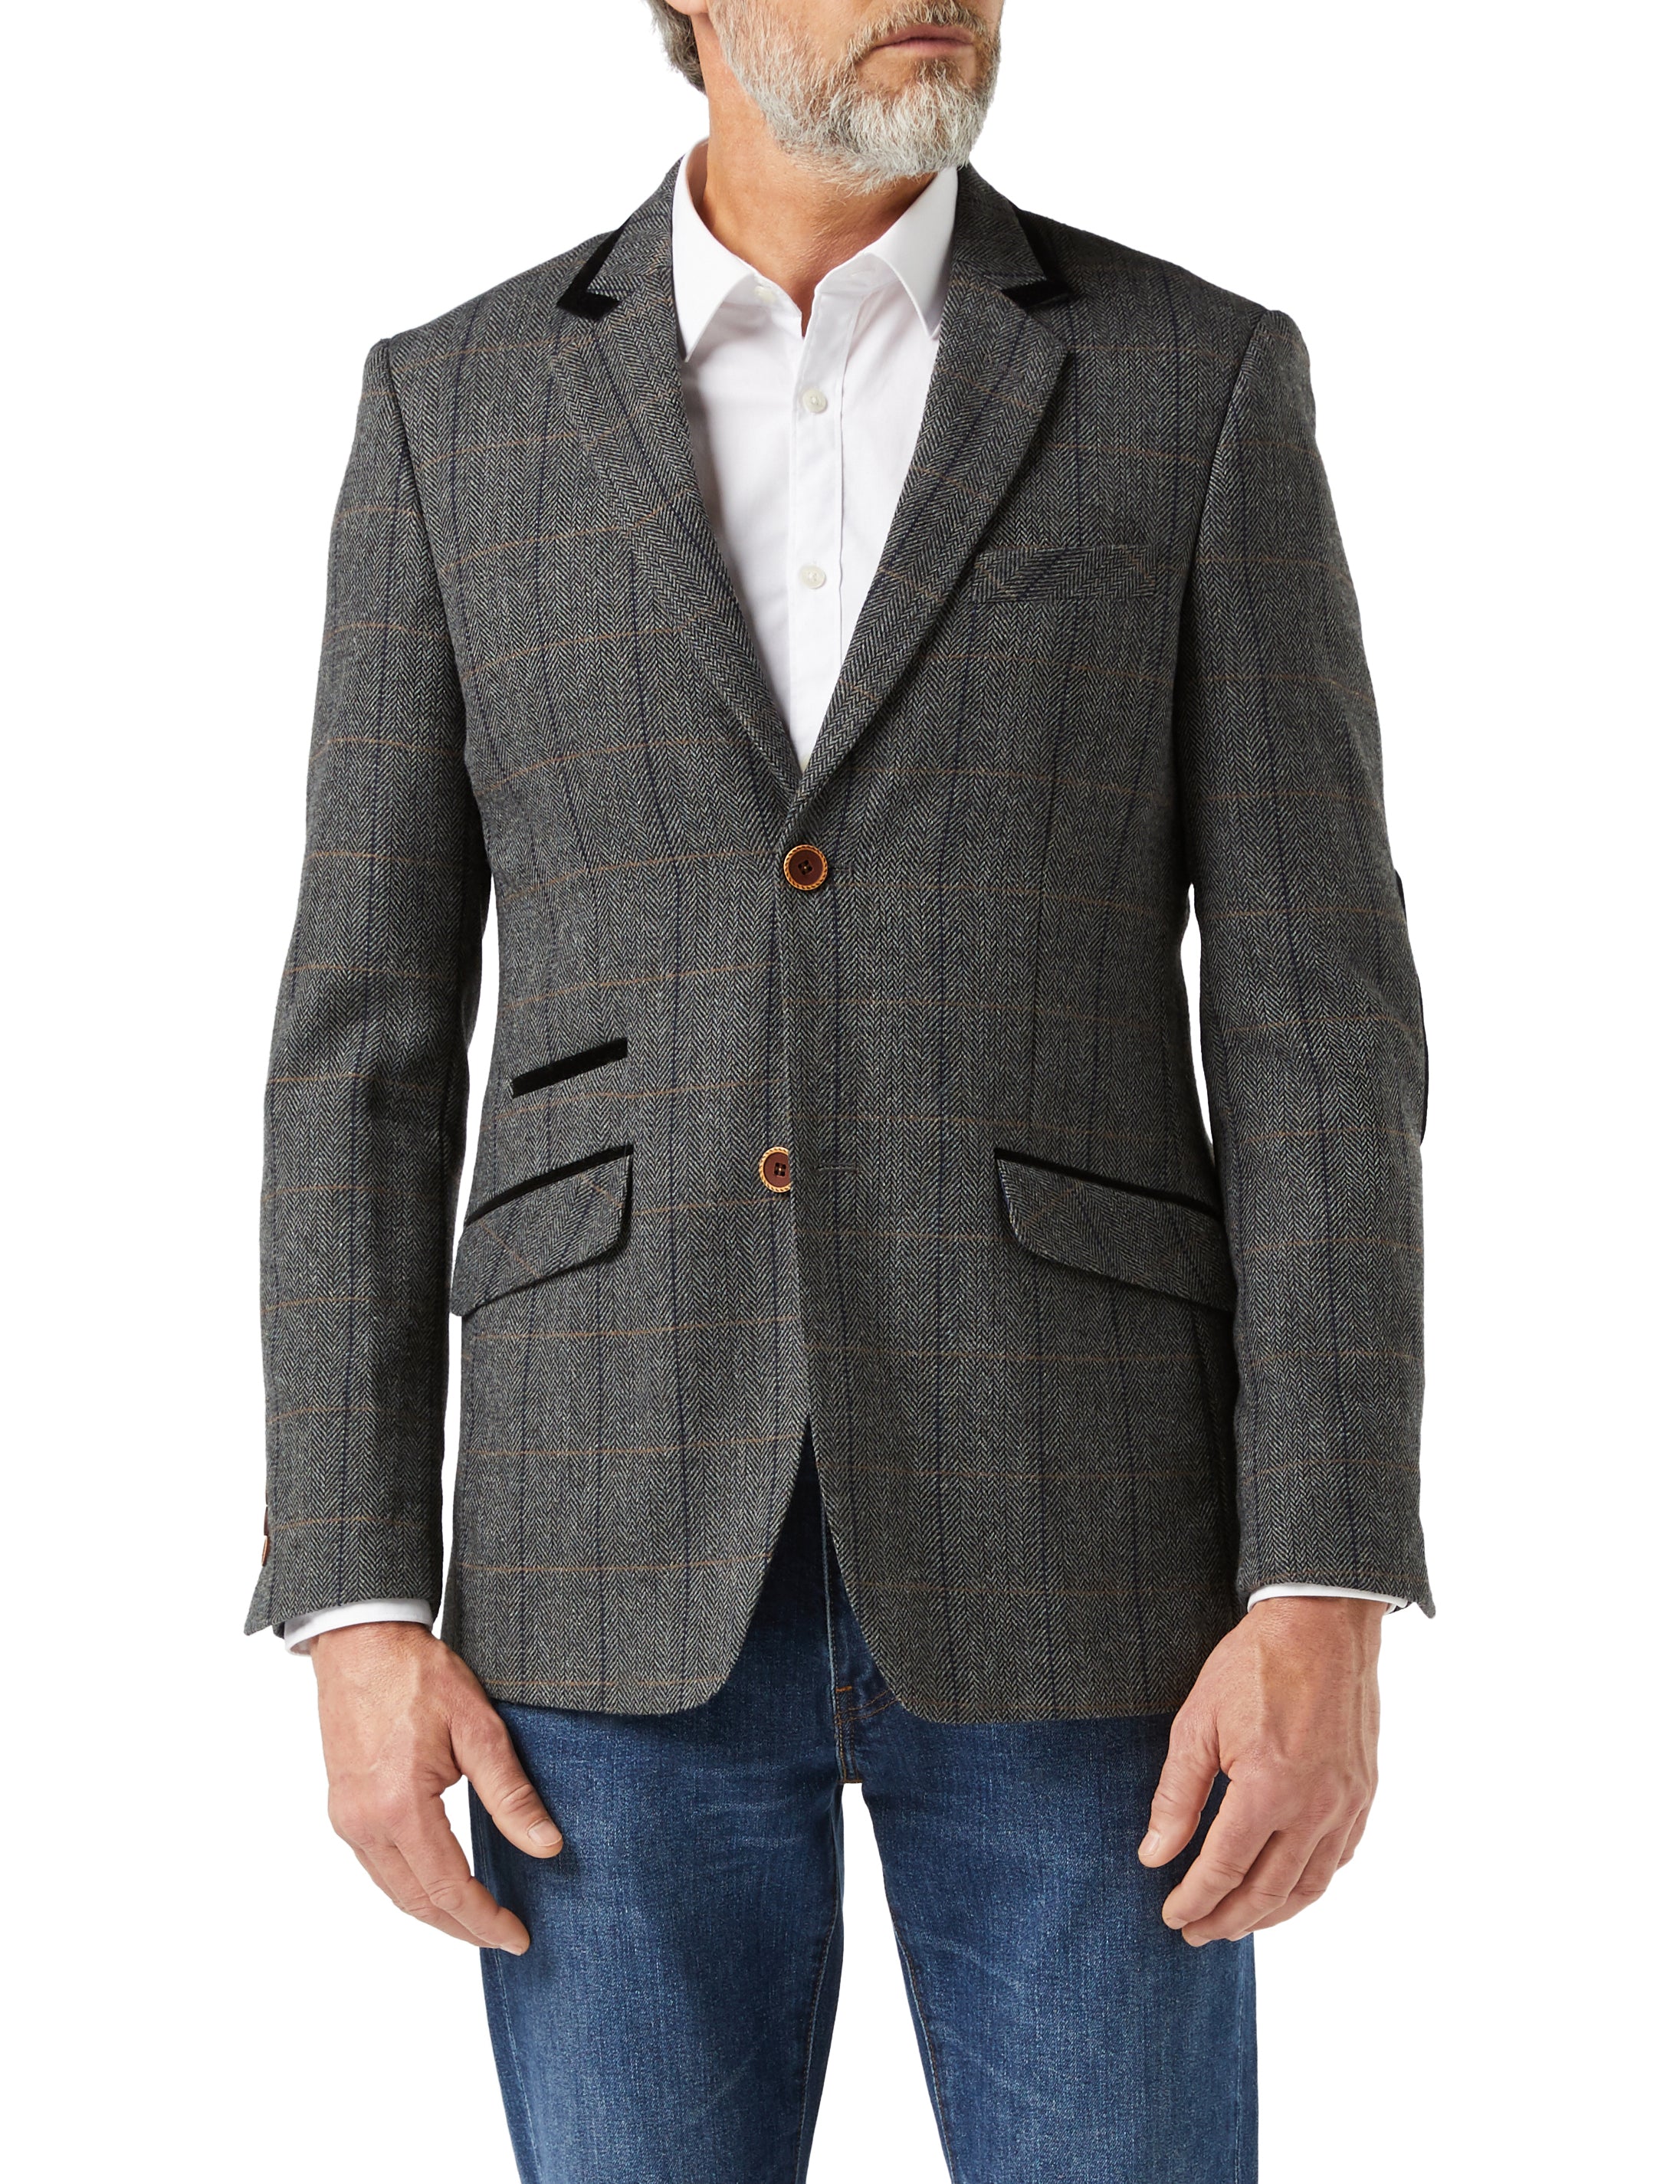 Mens Tweed Blazers & Jackets in Brown, Grey and Navy Blue